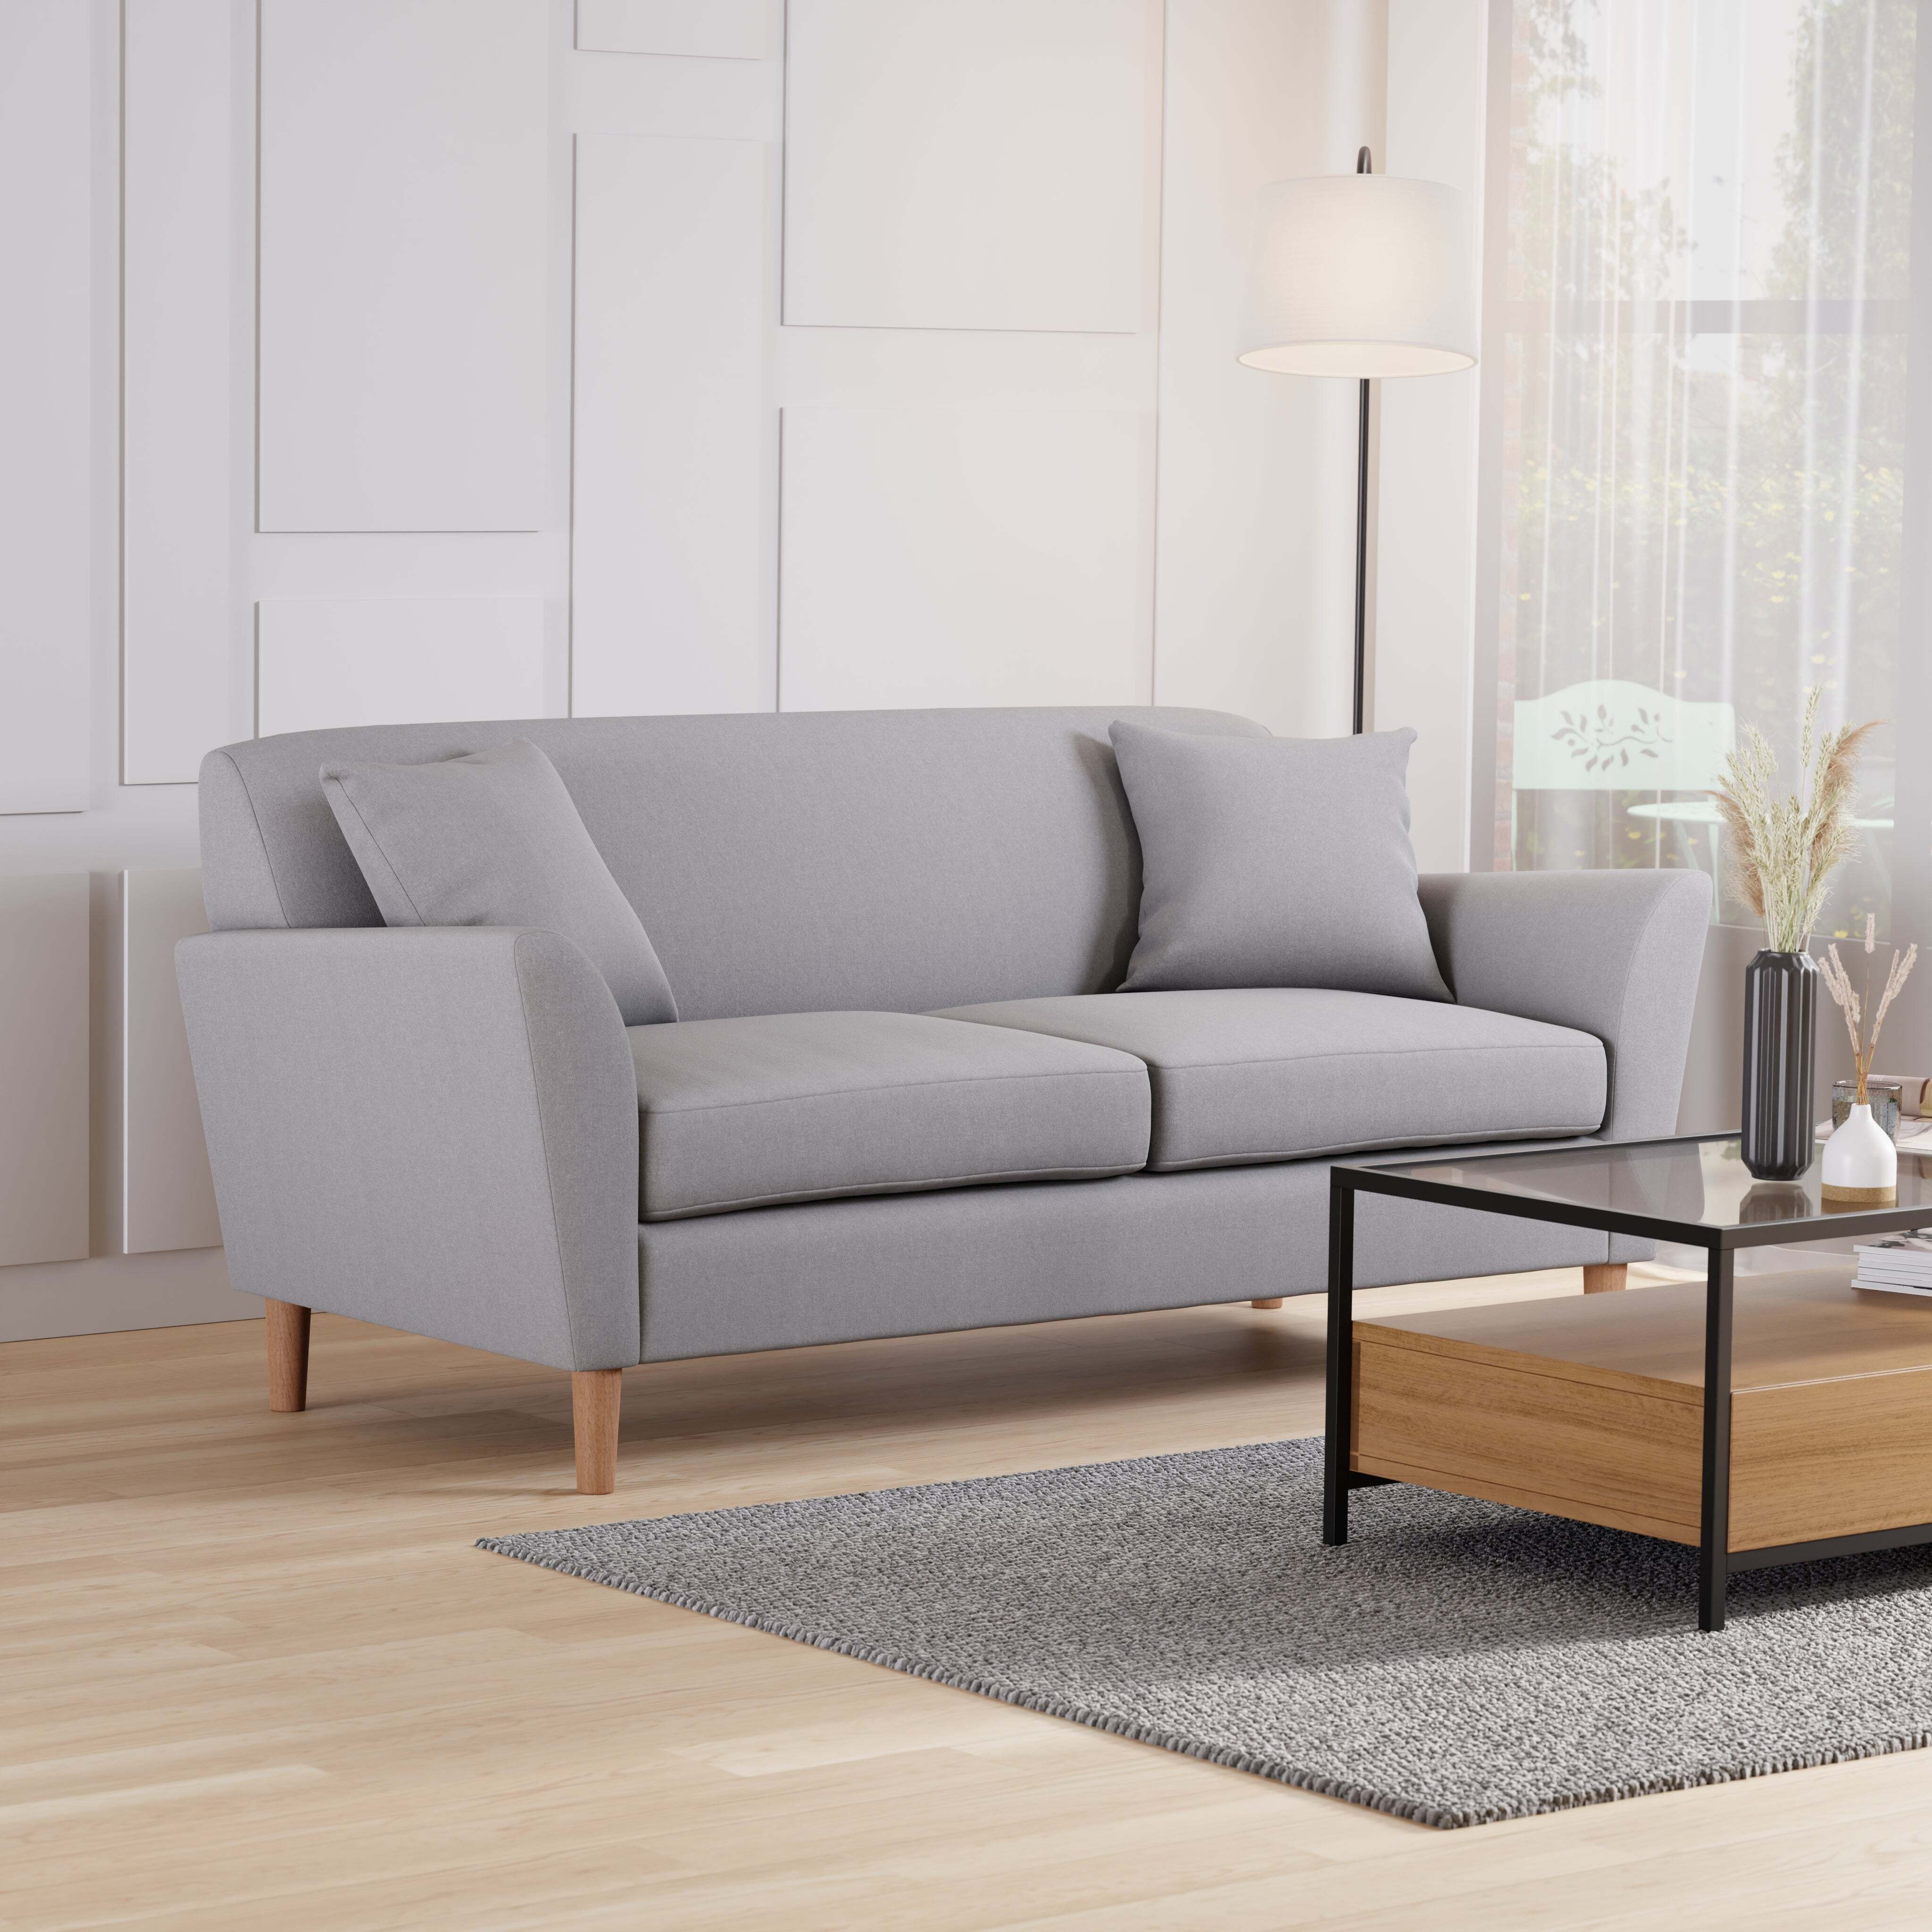 Ernie Soft Weave 3 Seater Sofa Grey By